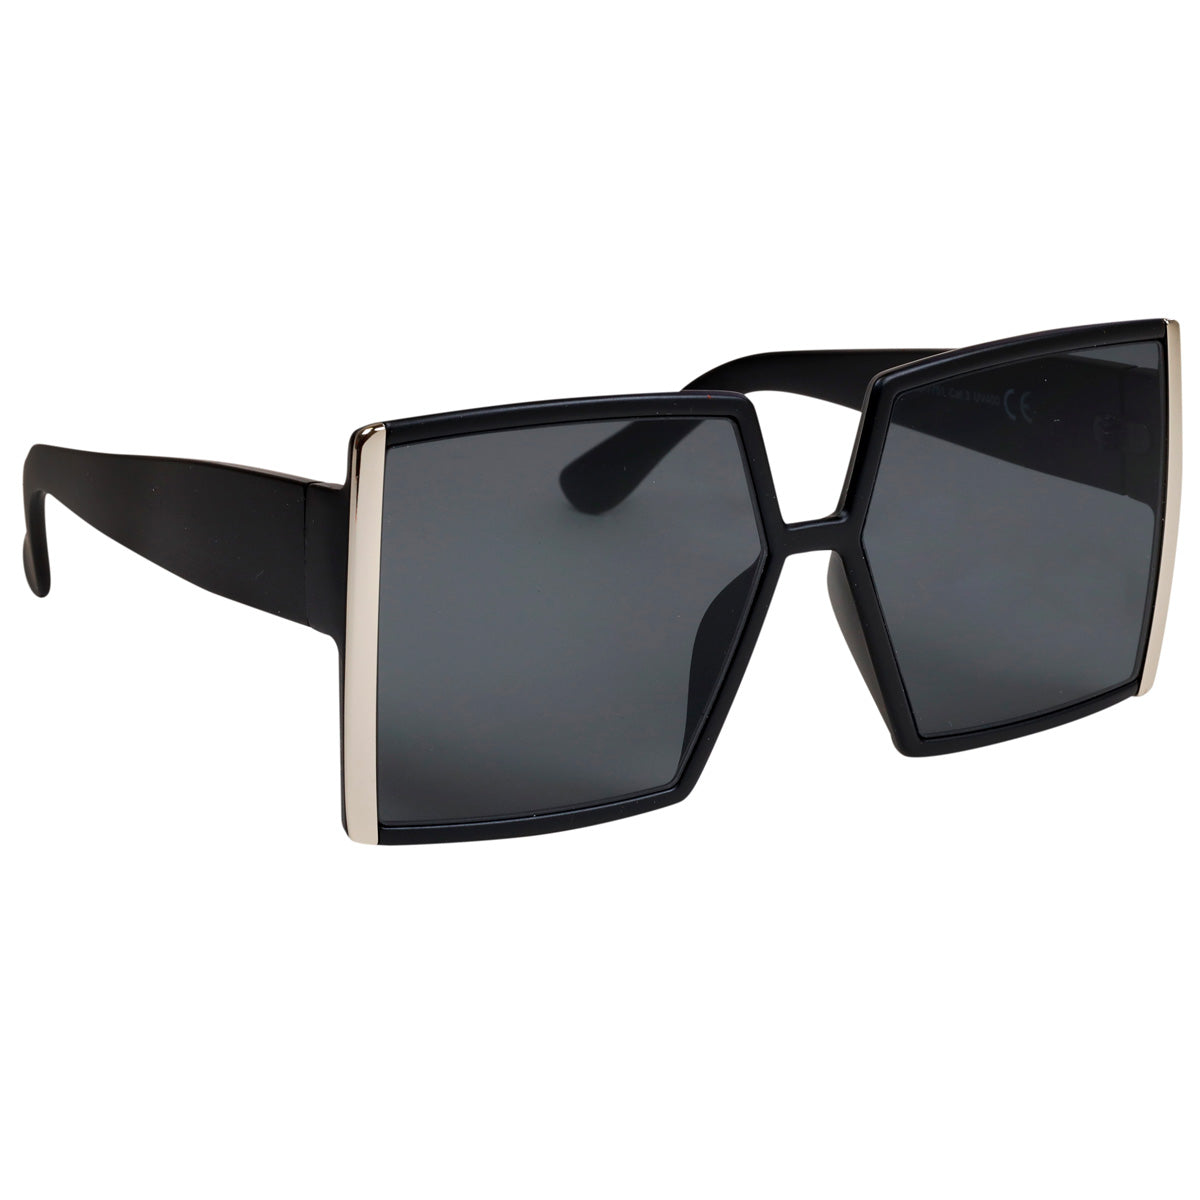 Big square sunglasses